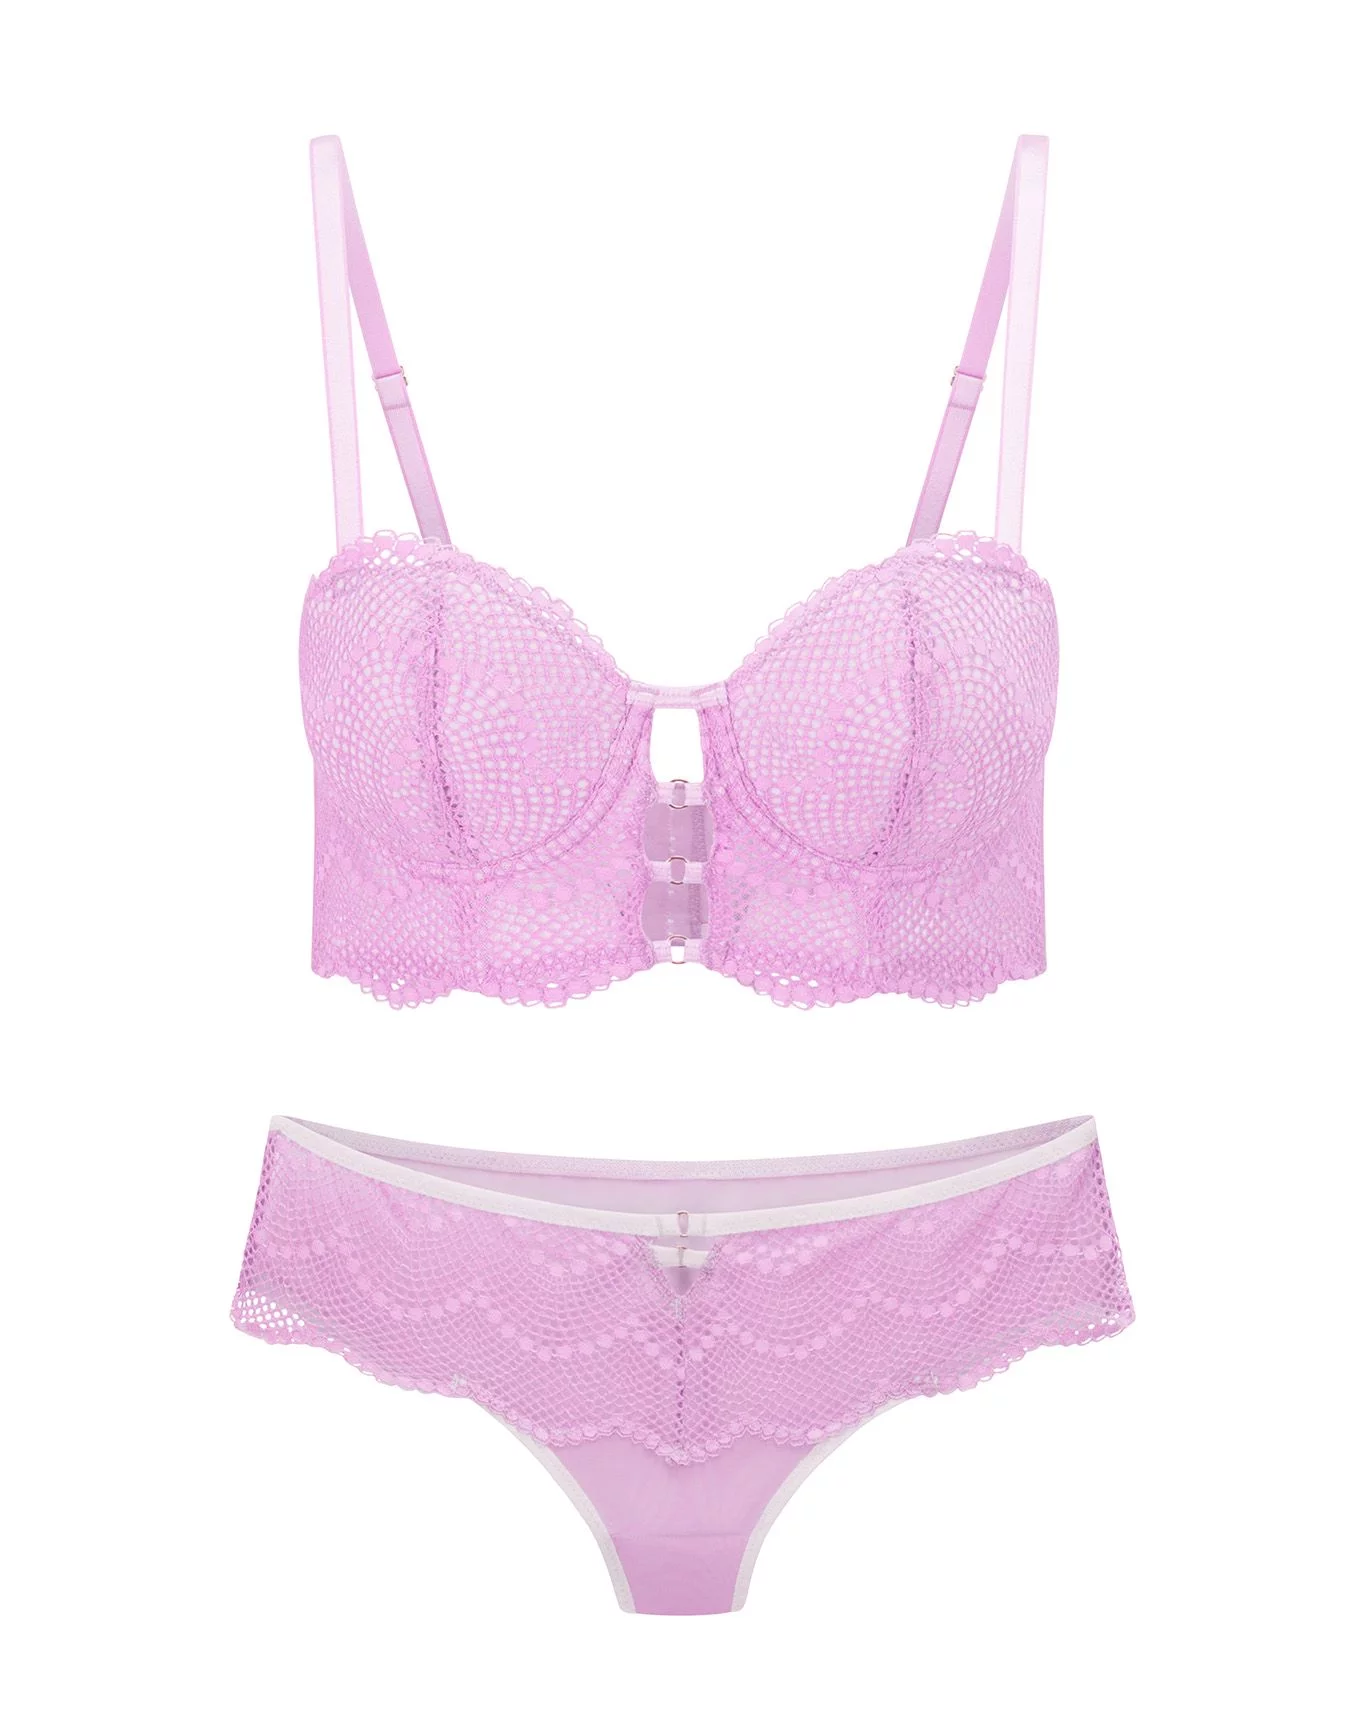 Victoria's Secret racerback push up bra size 32D Pink - $35 - From